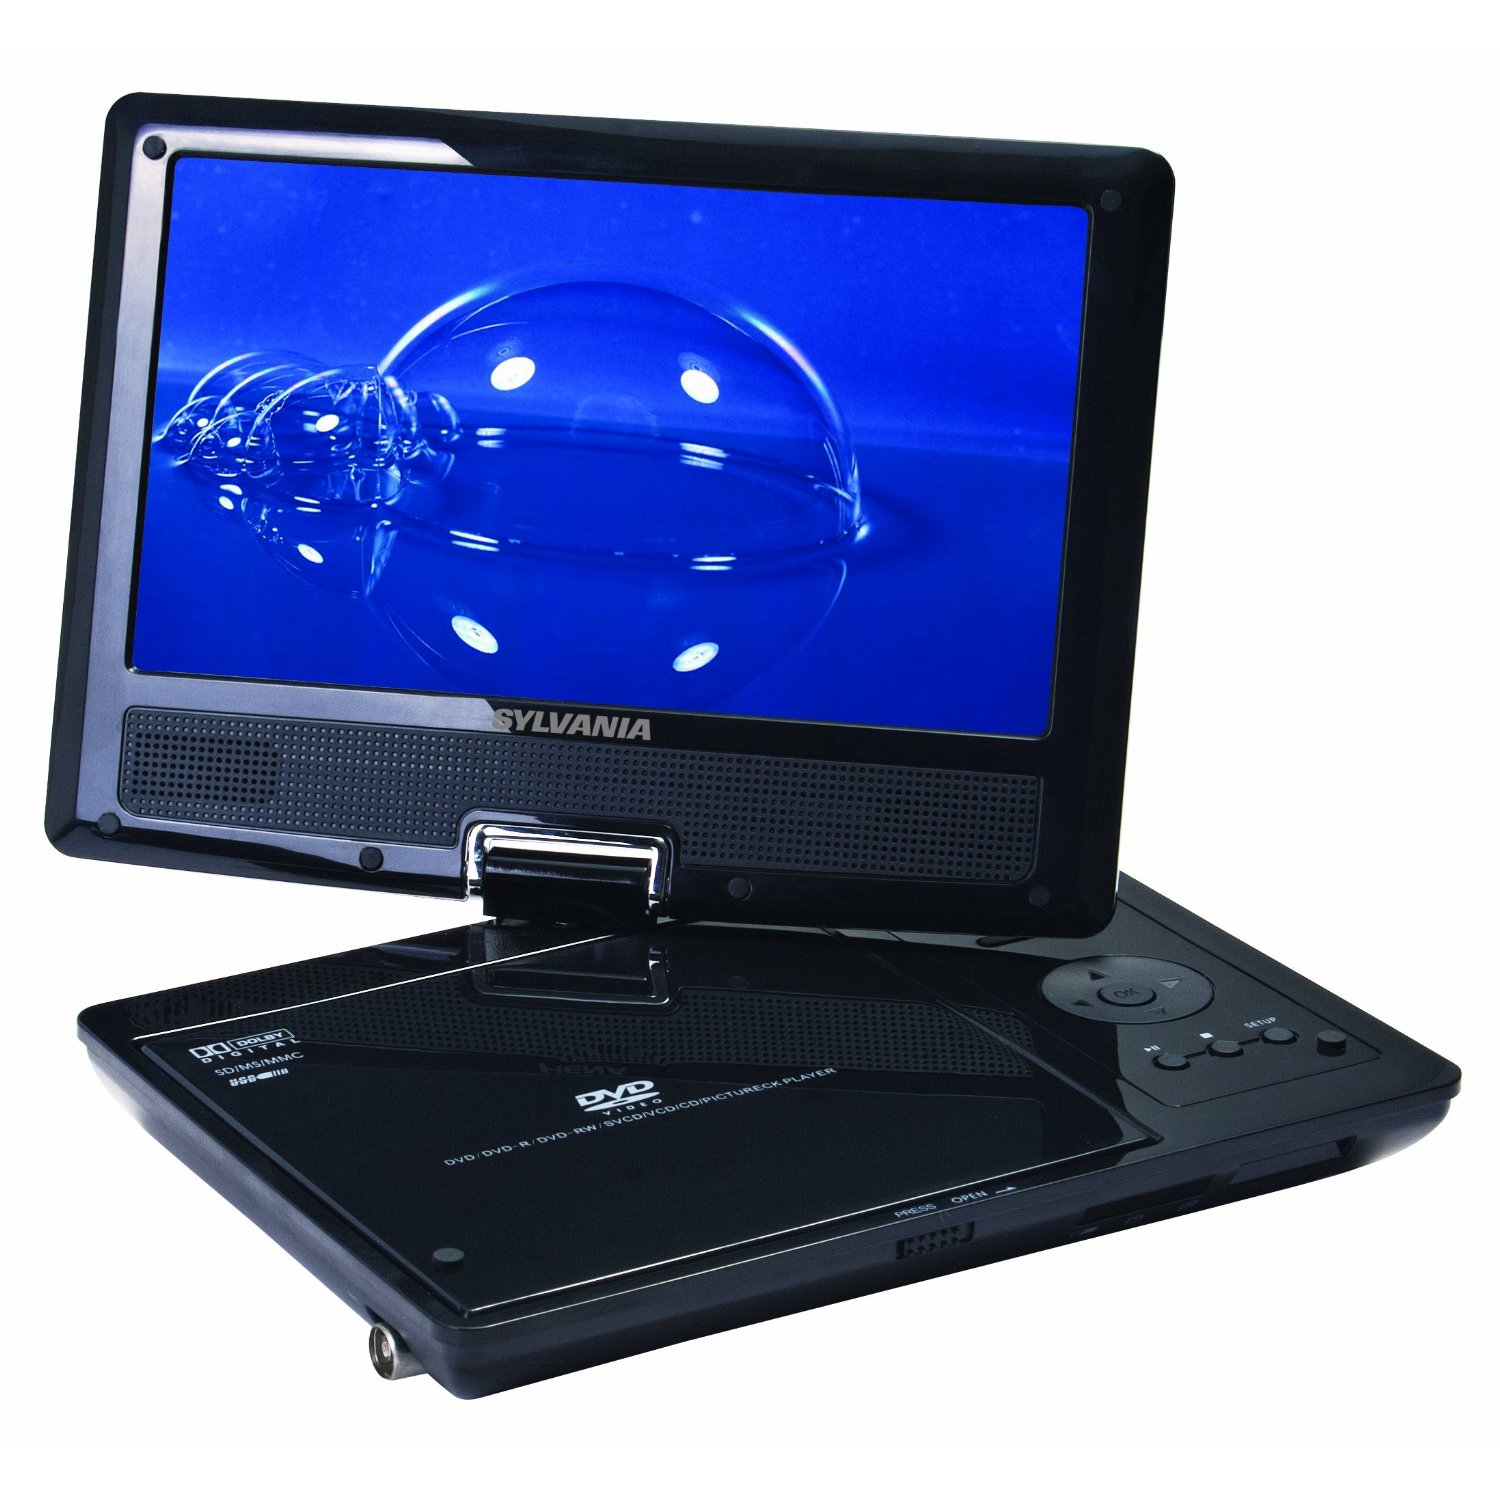 Sylvania SDVD9000B2 9-Inch Portable DVD Player with Car Bag/Kit, Swivel Screen, USB/SD Card Reader, Piano Black Finish  $64.99